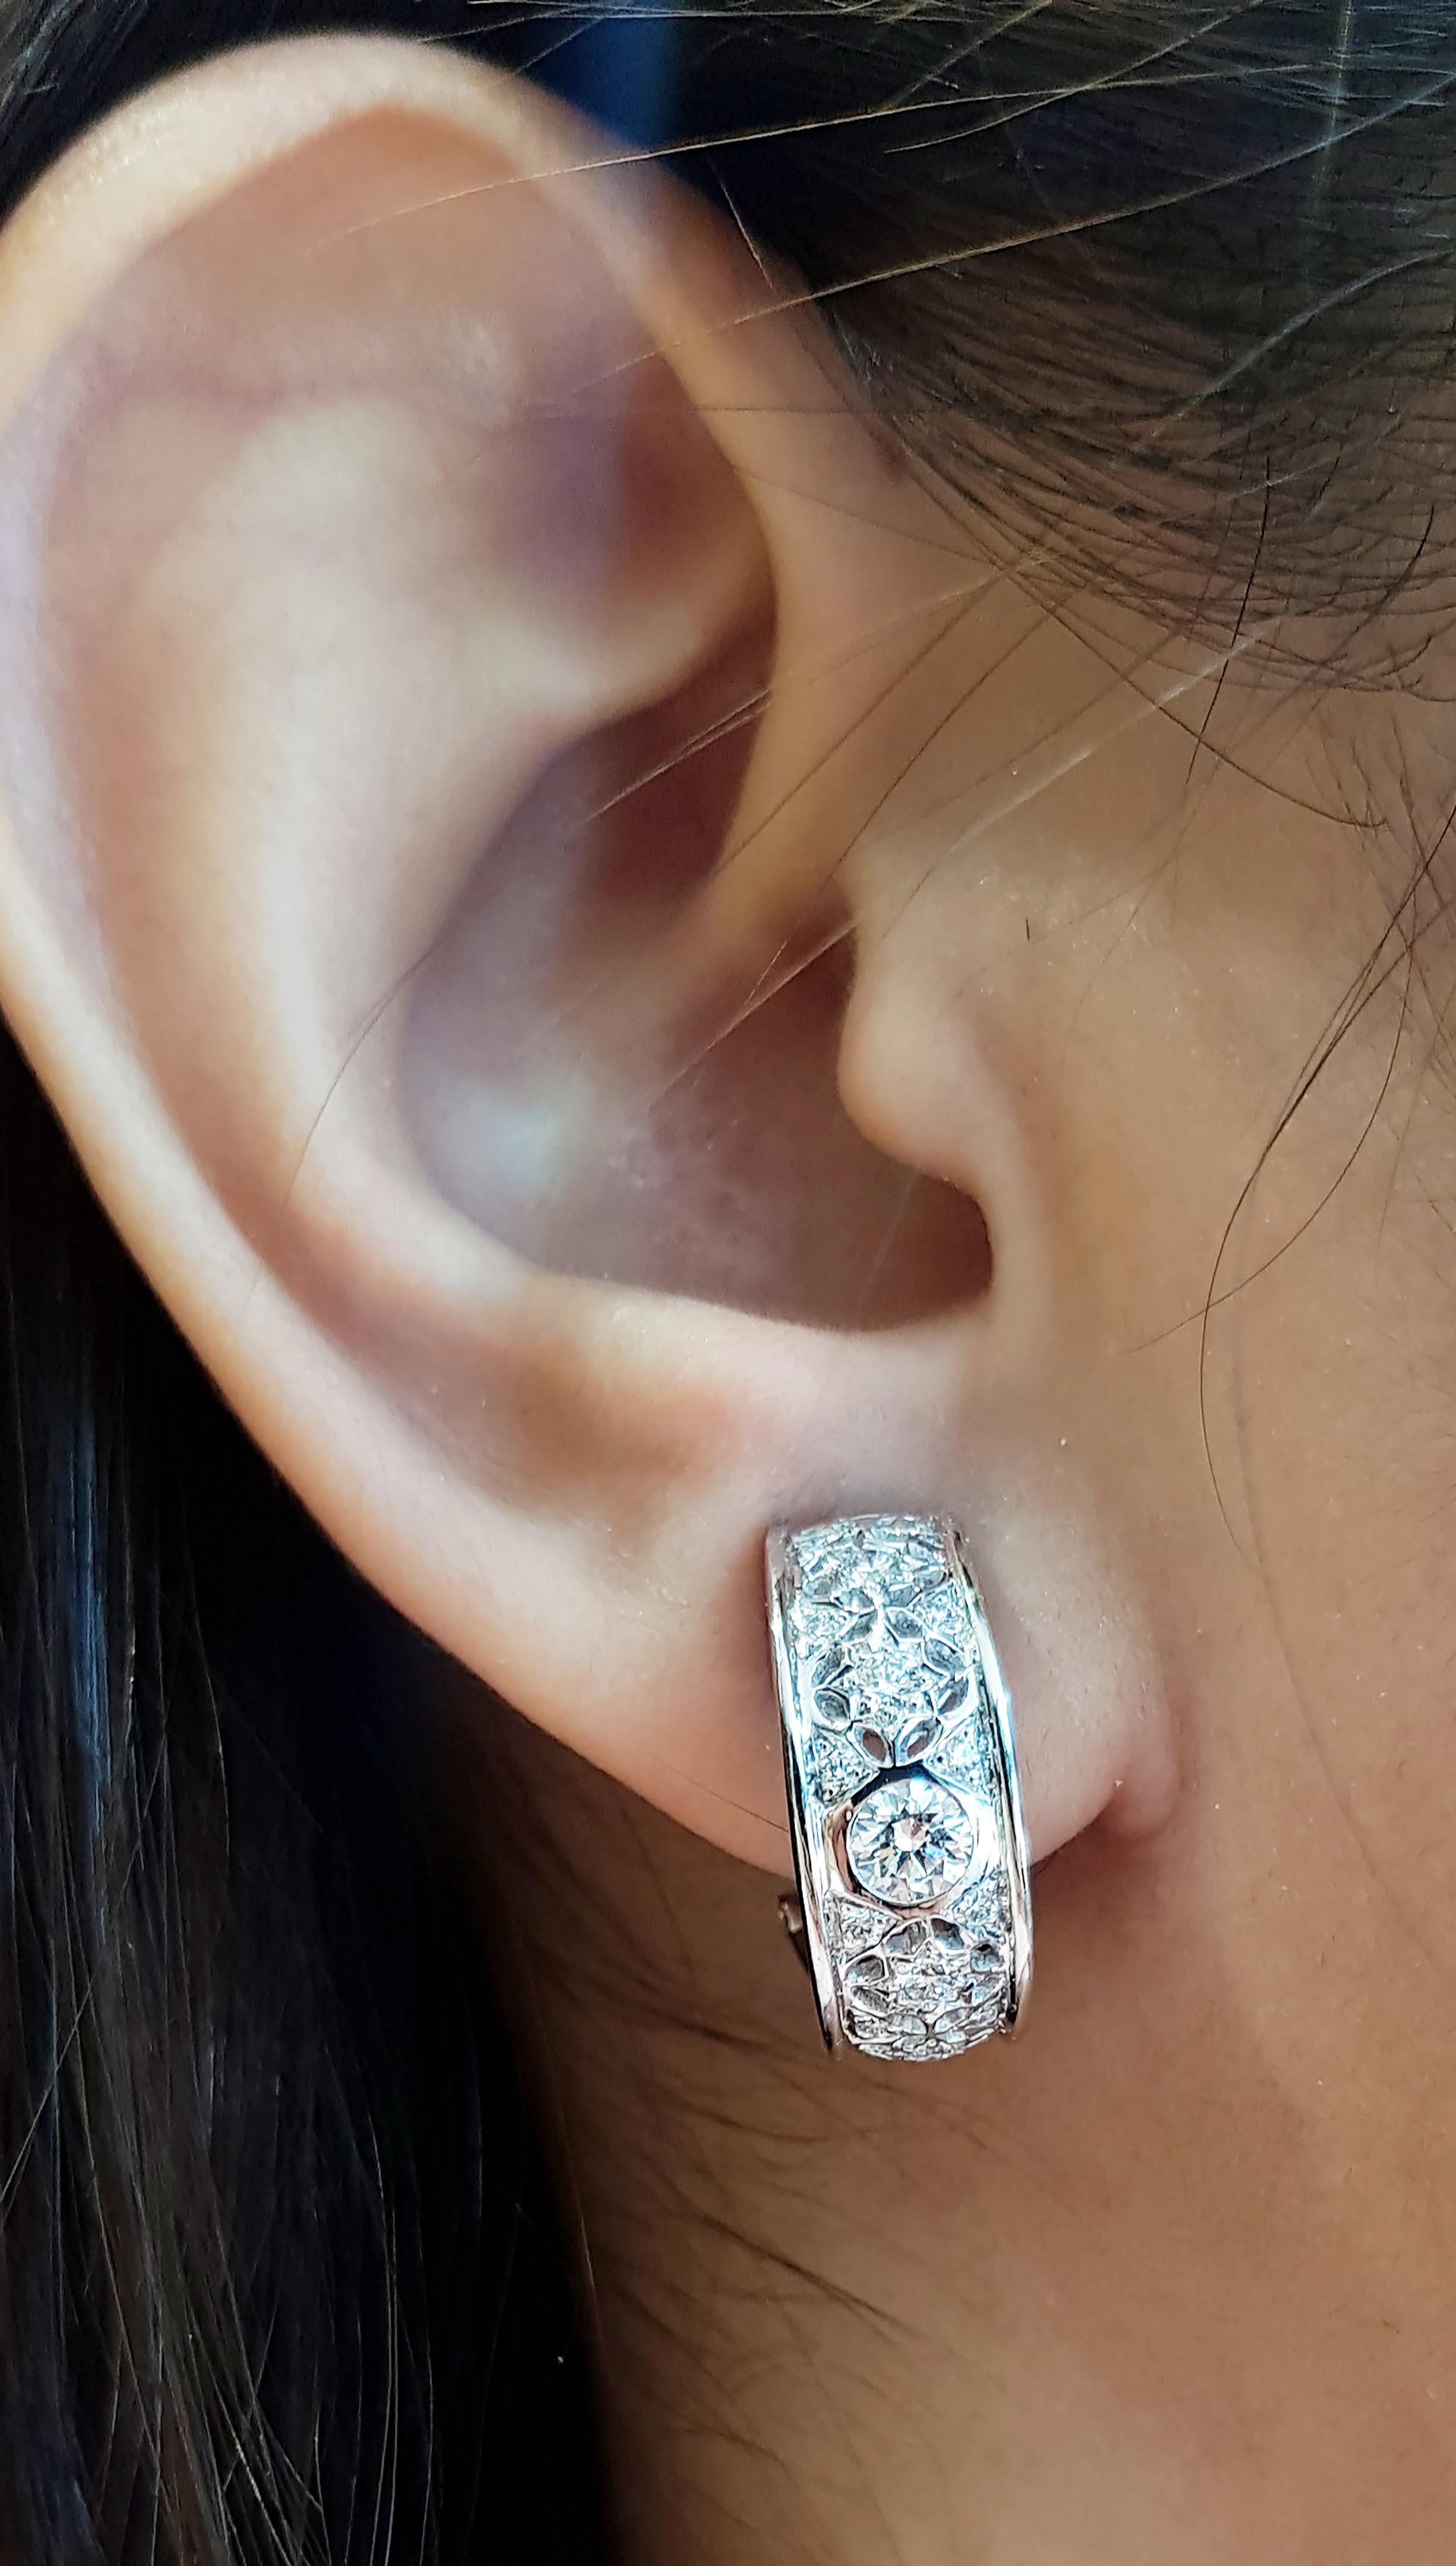 Diamond 0.88 carat Earrings set in 18 Karat White Gold Settings

Width:  0.7 cm 
Length: 1.7 cm
Total Weight: 8.75 grams

